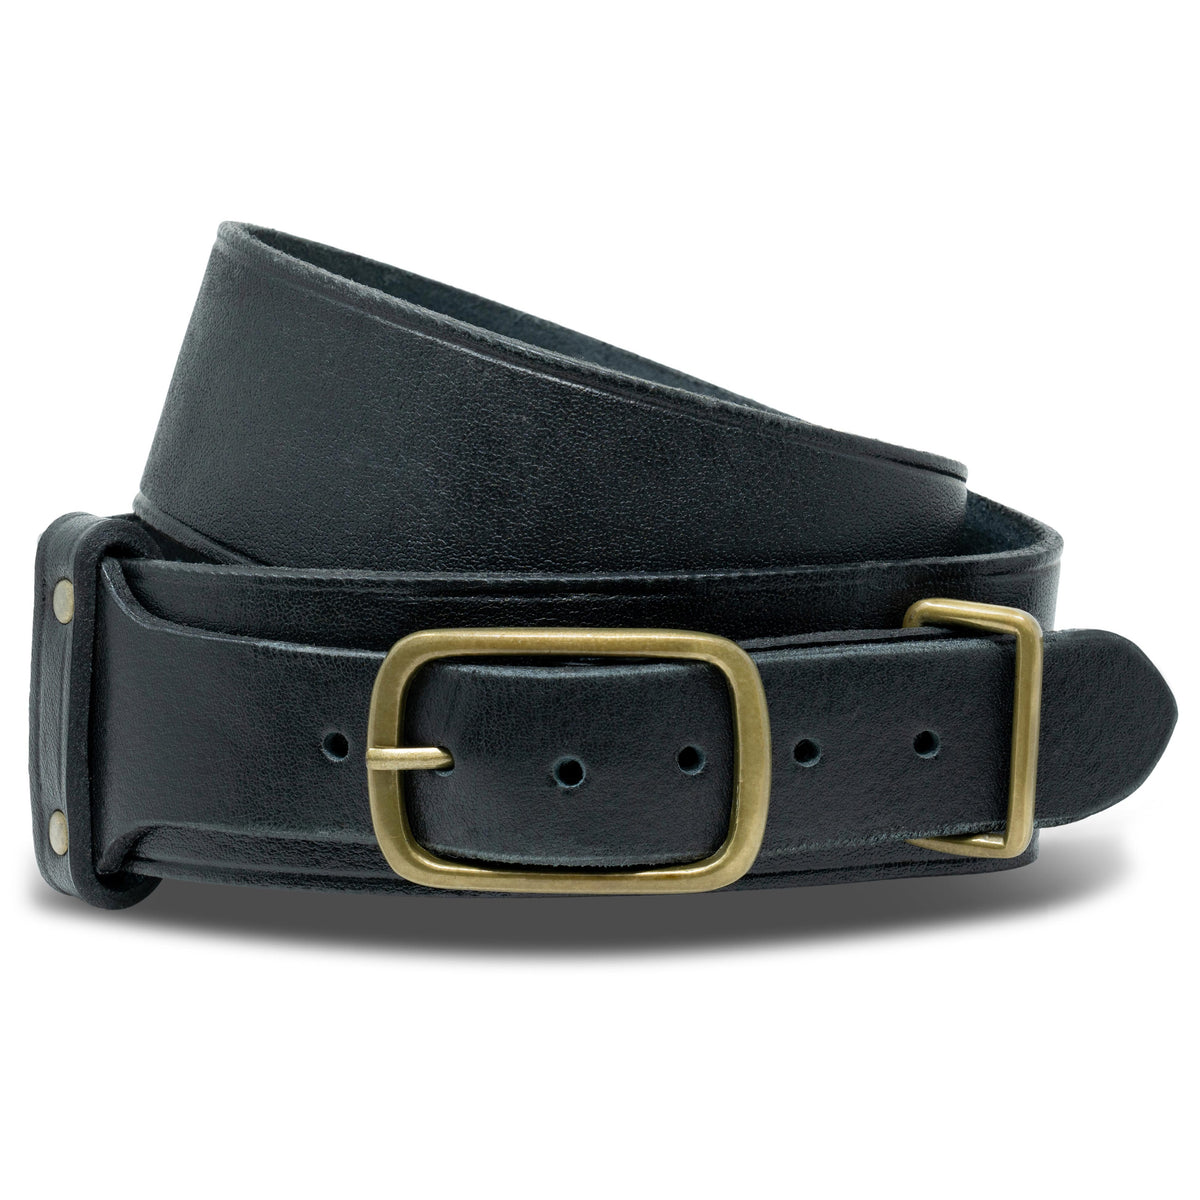 Dundee Kilt Belt - Black Leather Classic Cover